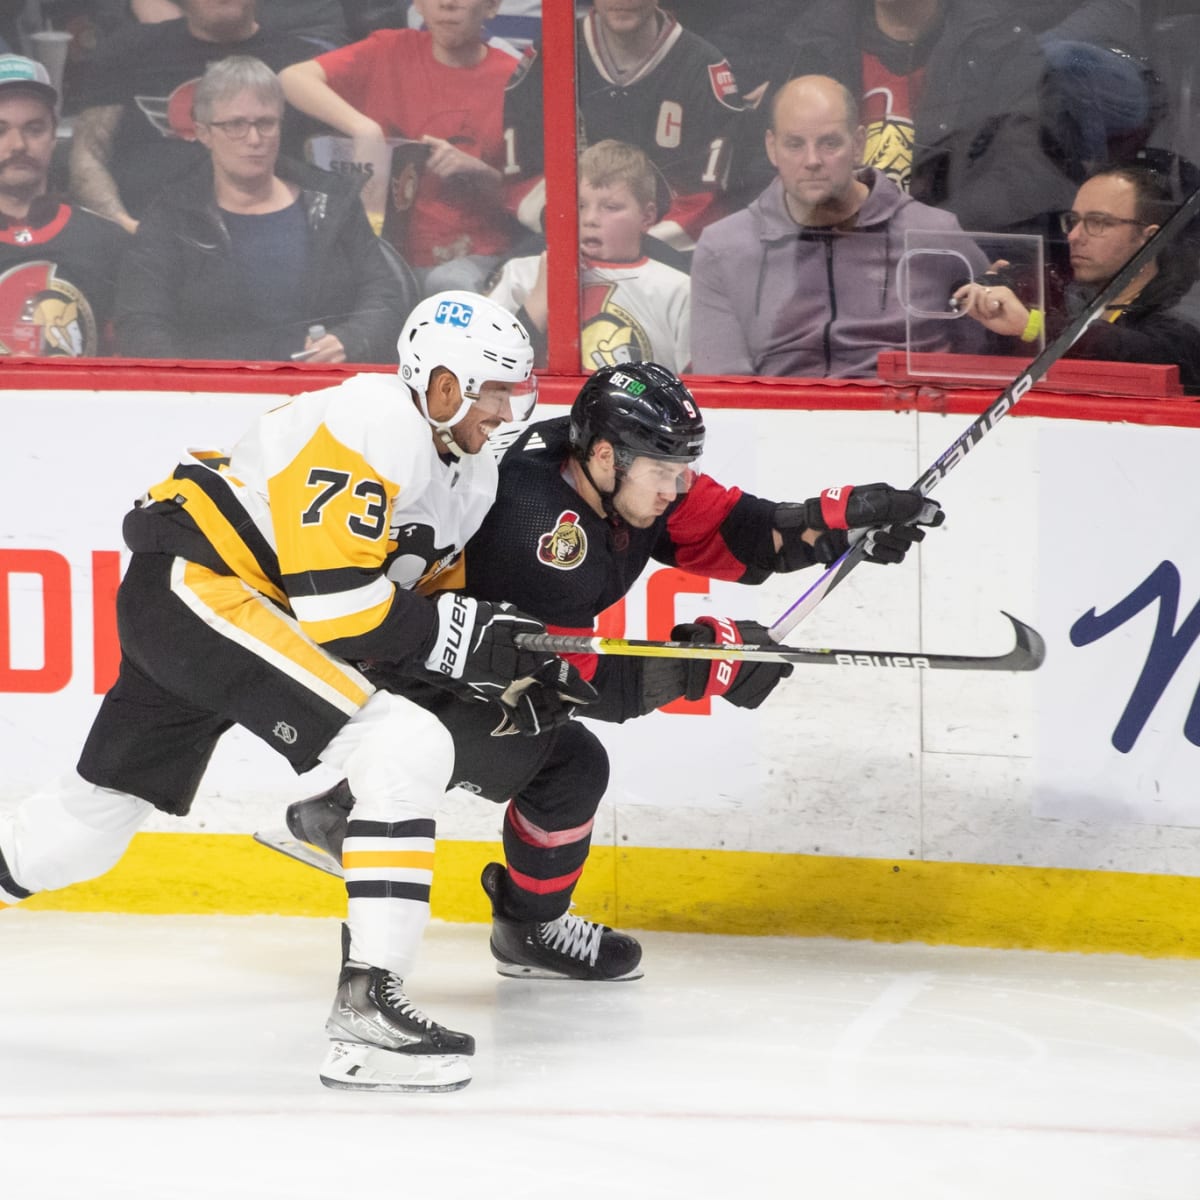 NHL: Joseph brothers get matching high-sticking penalties